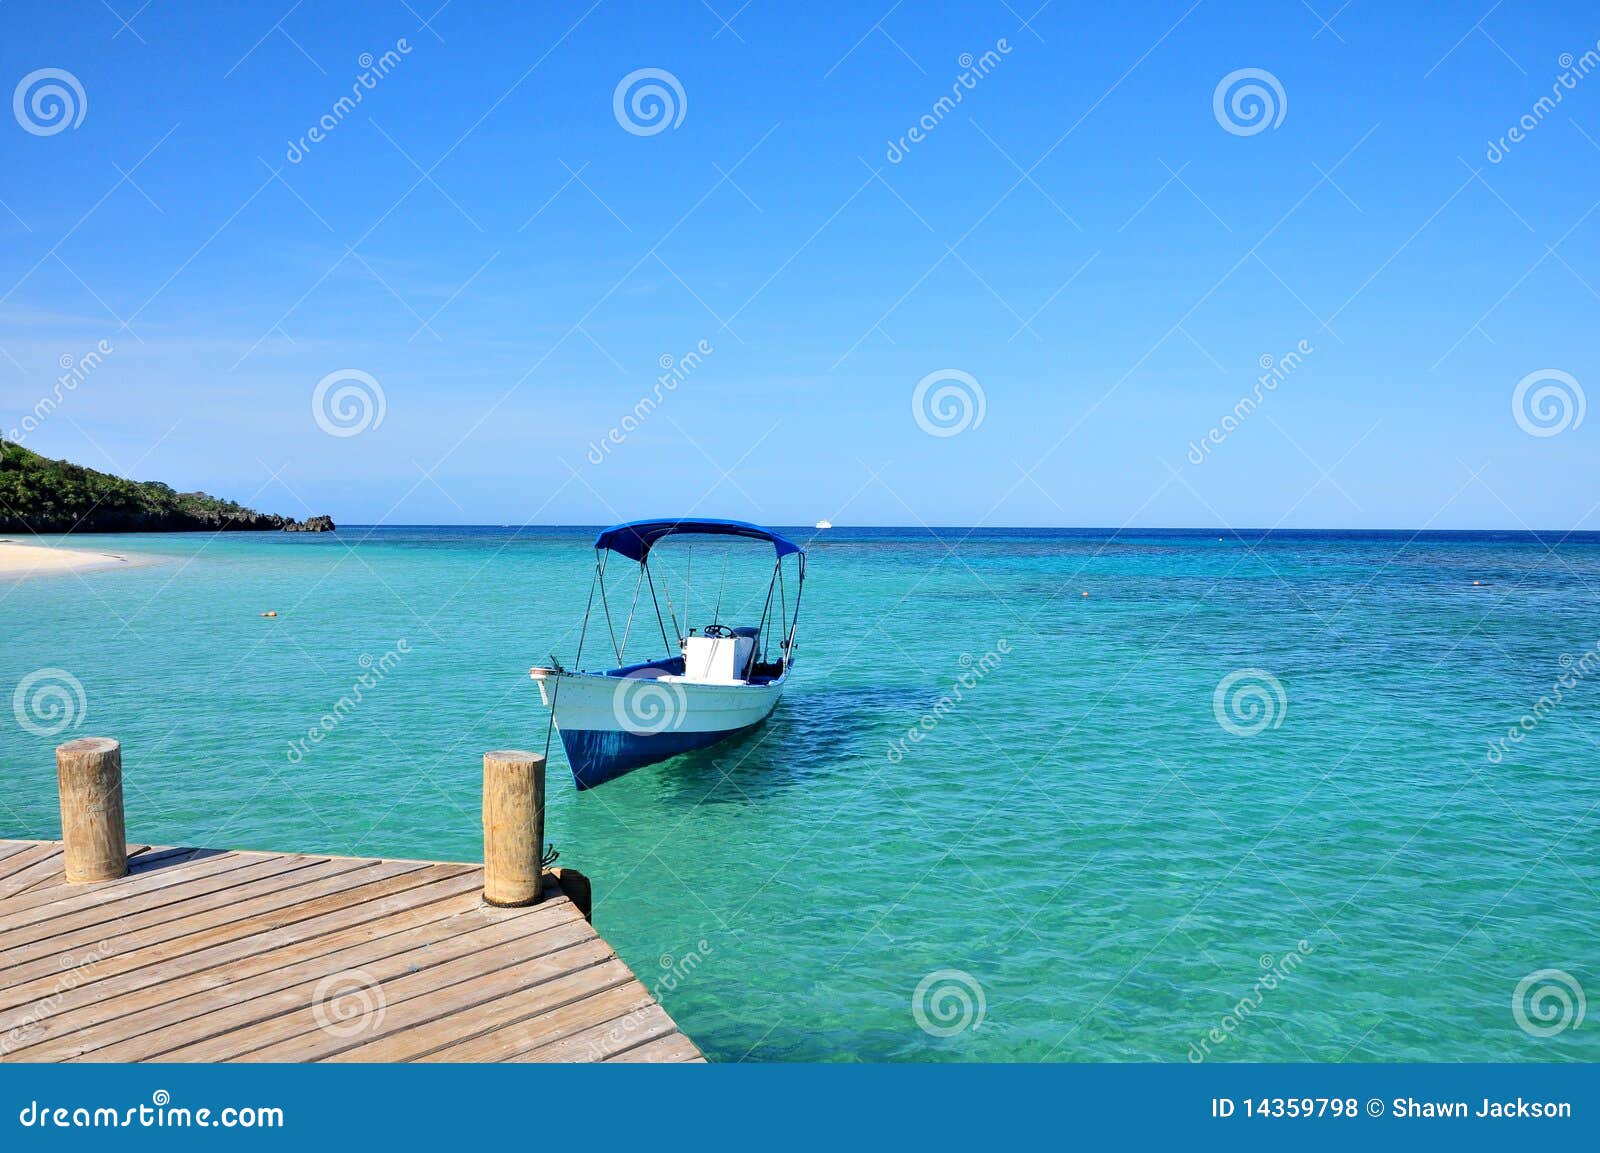 boat moored in caribbean sea